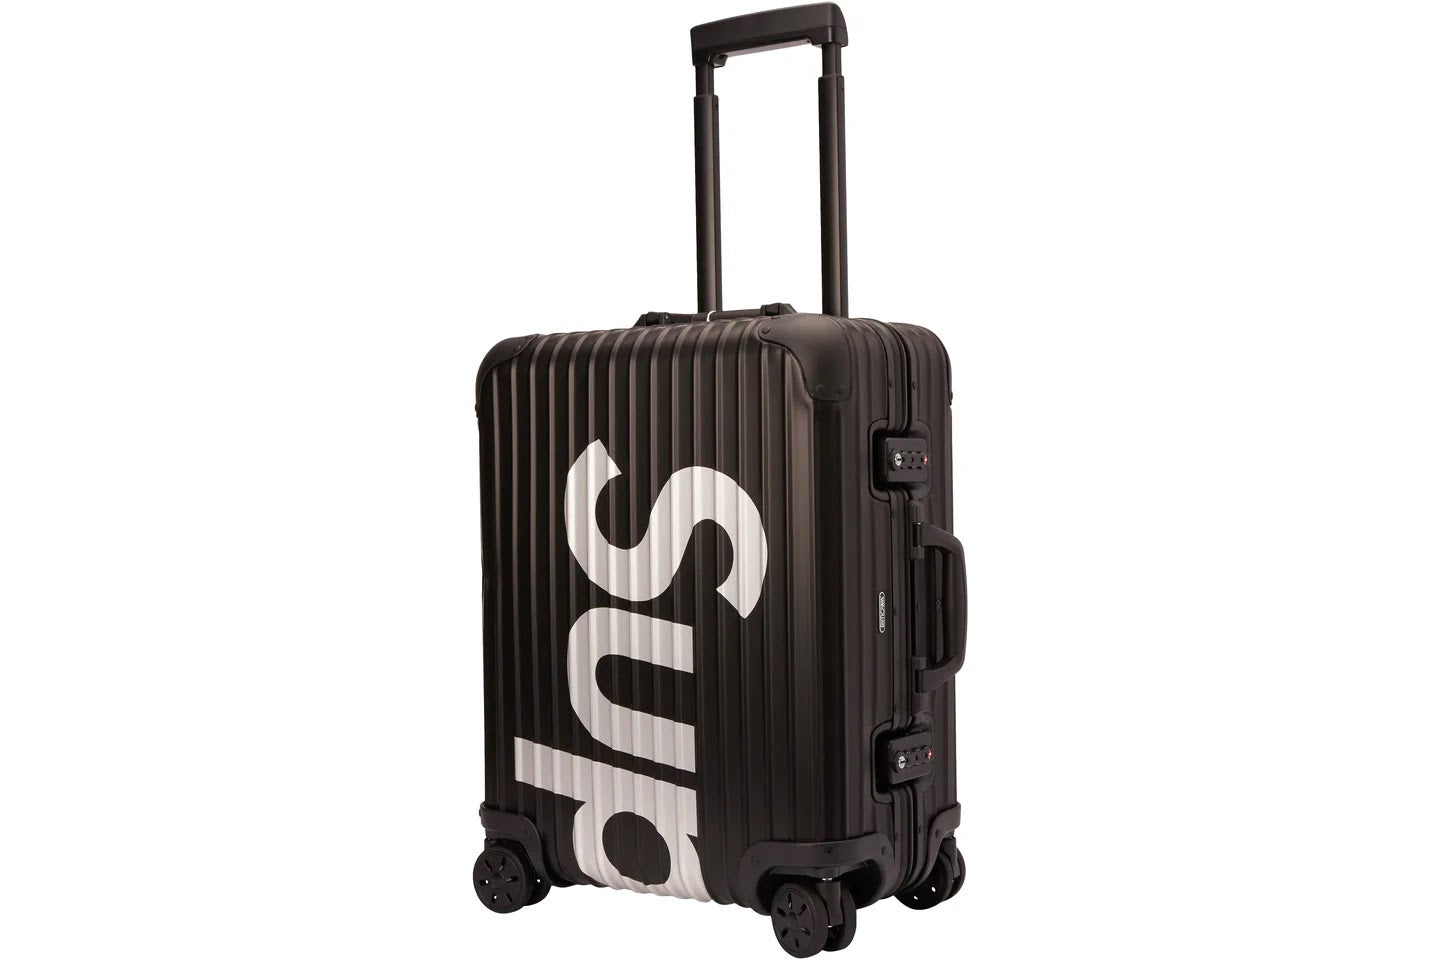 Rimowa X Supreme Carry On Luggage